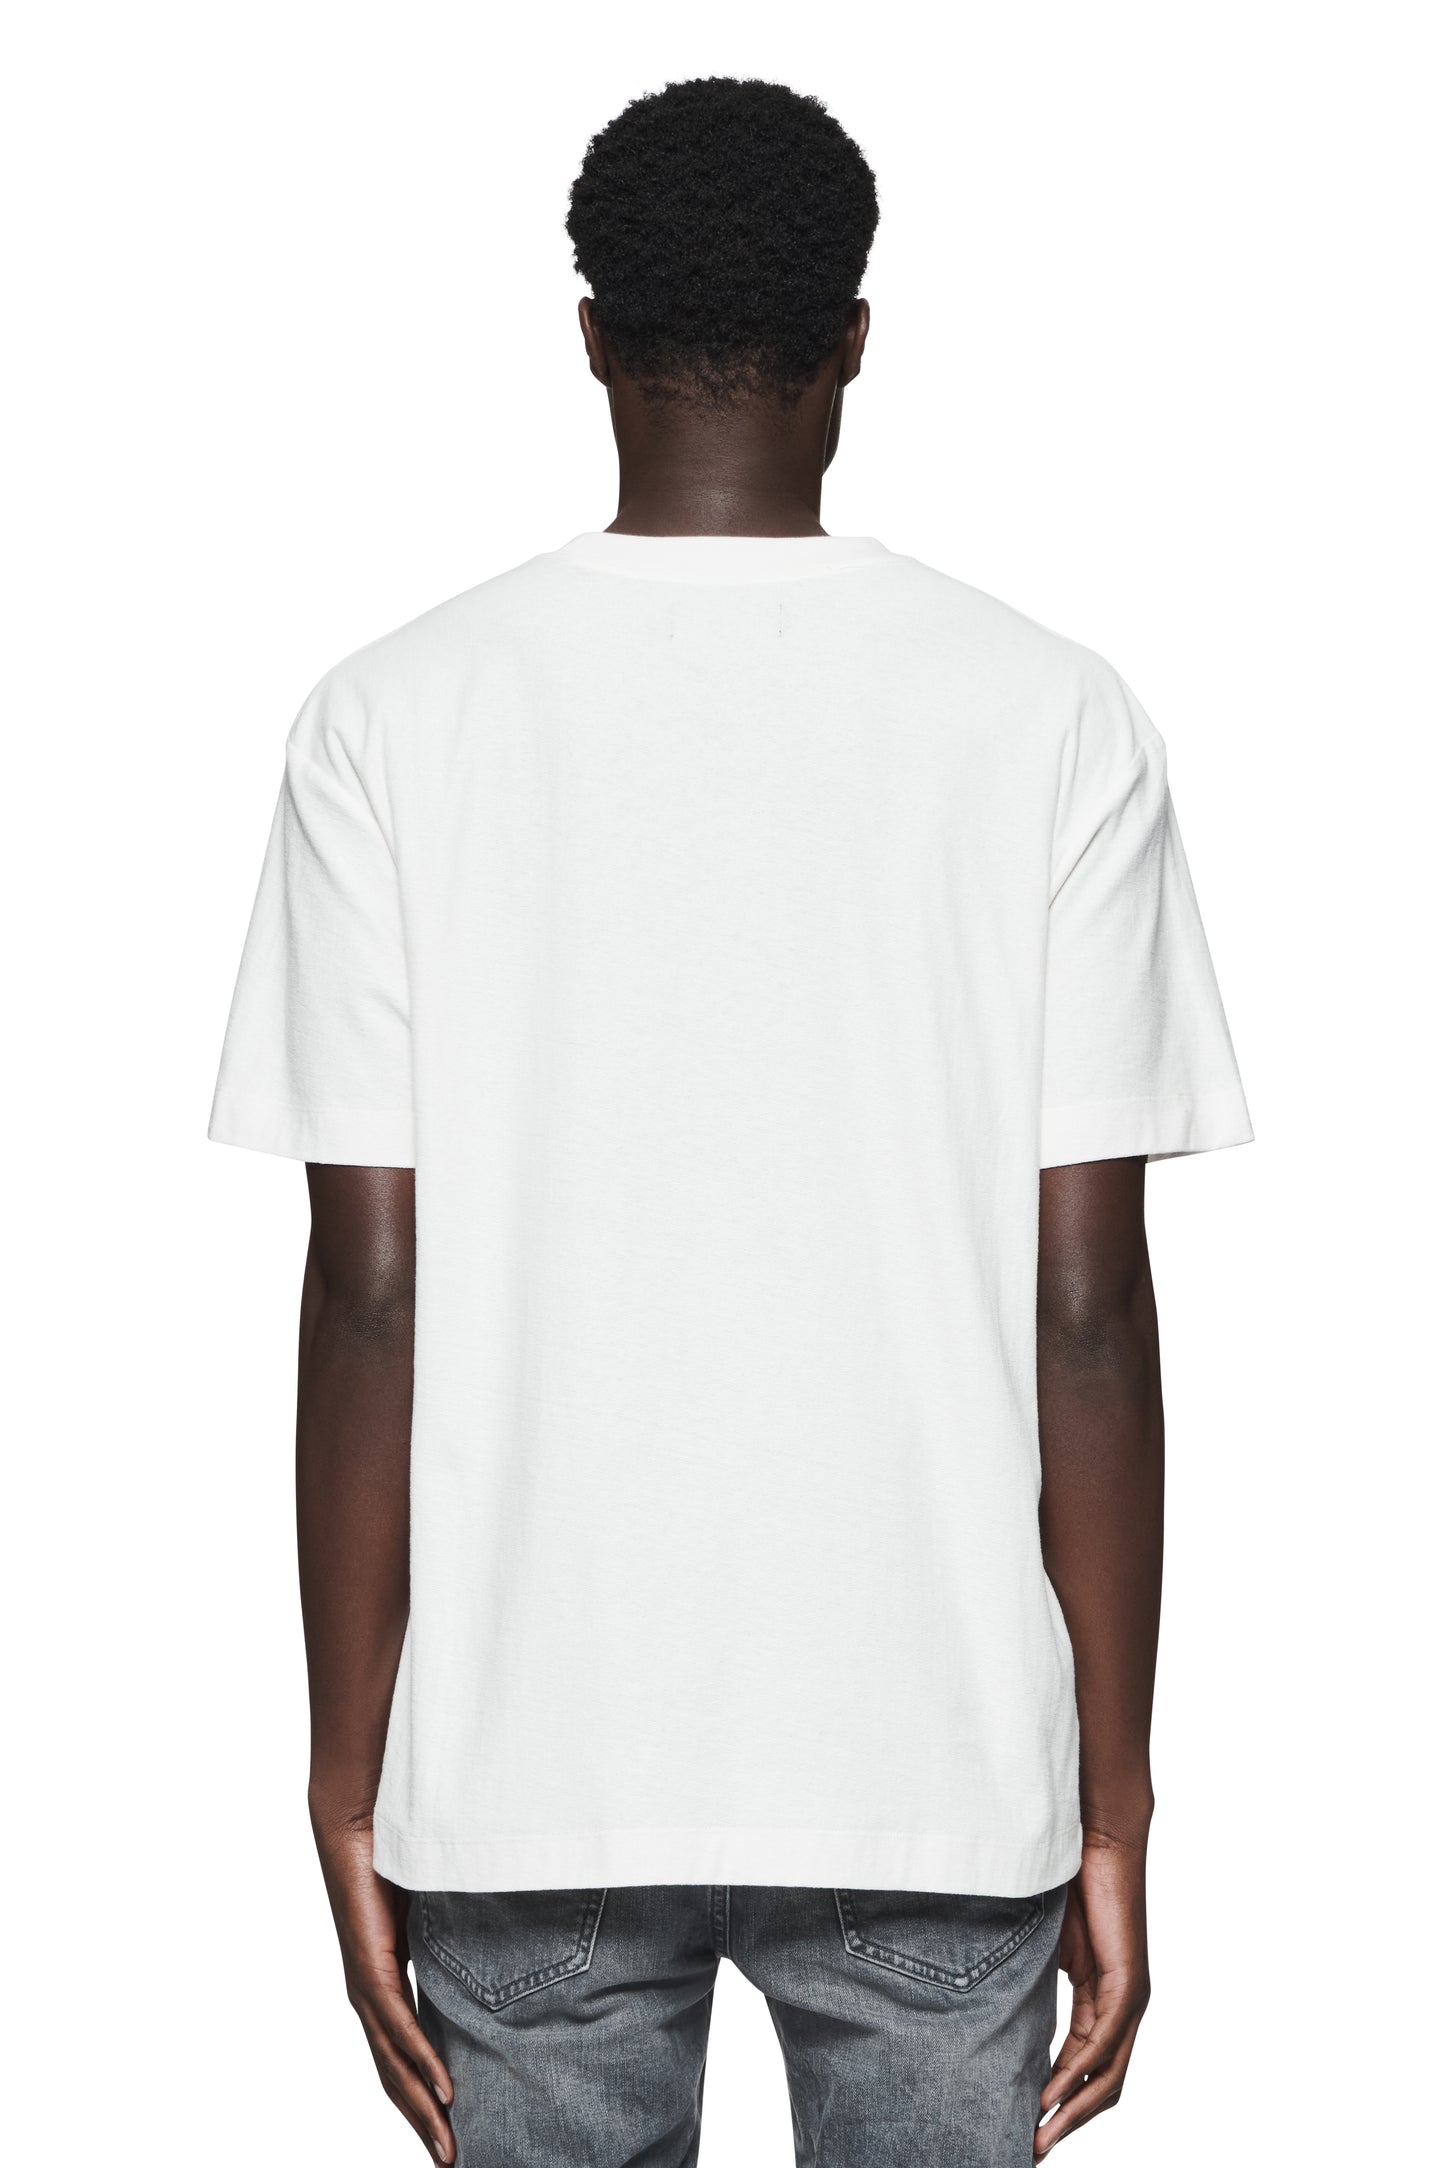 Wordmark T-Shirt – PURPLE BRAND